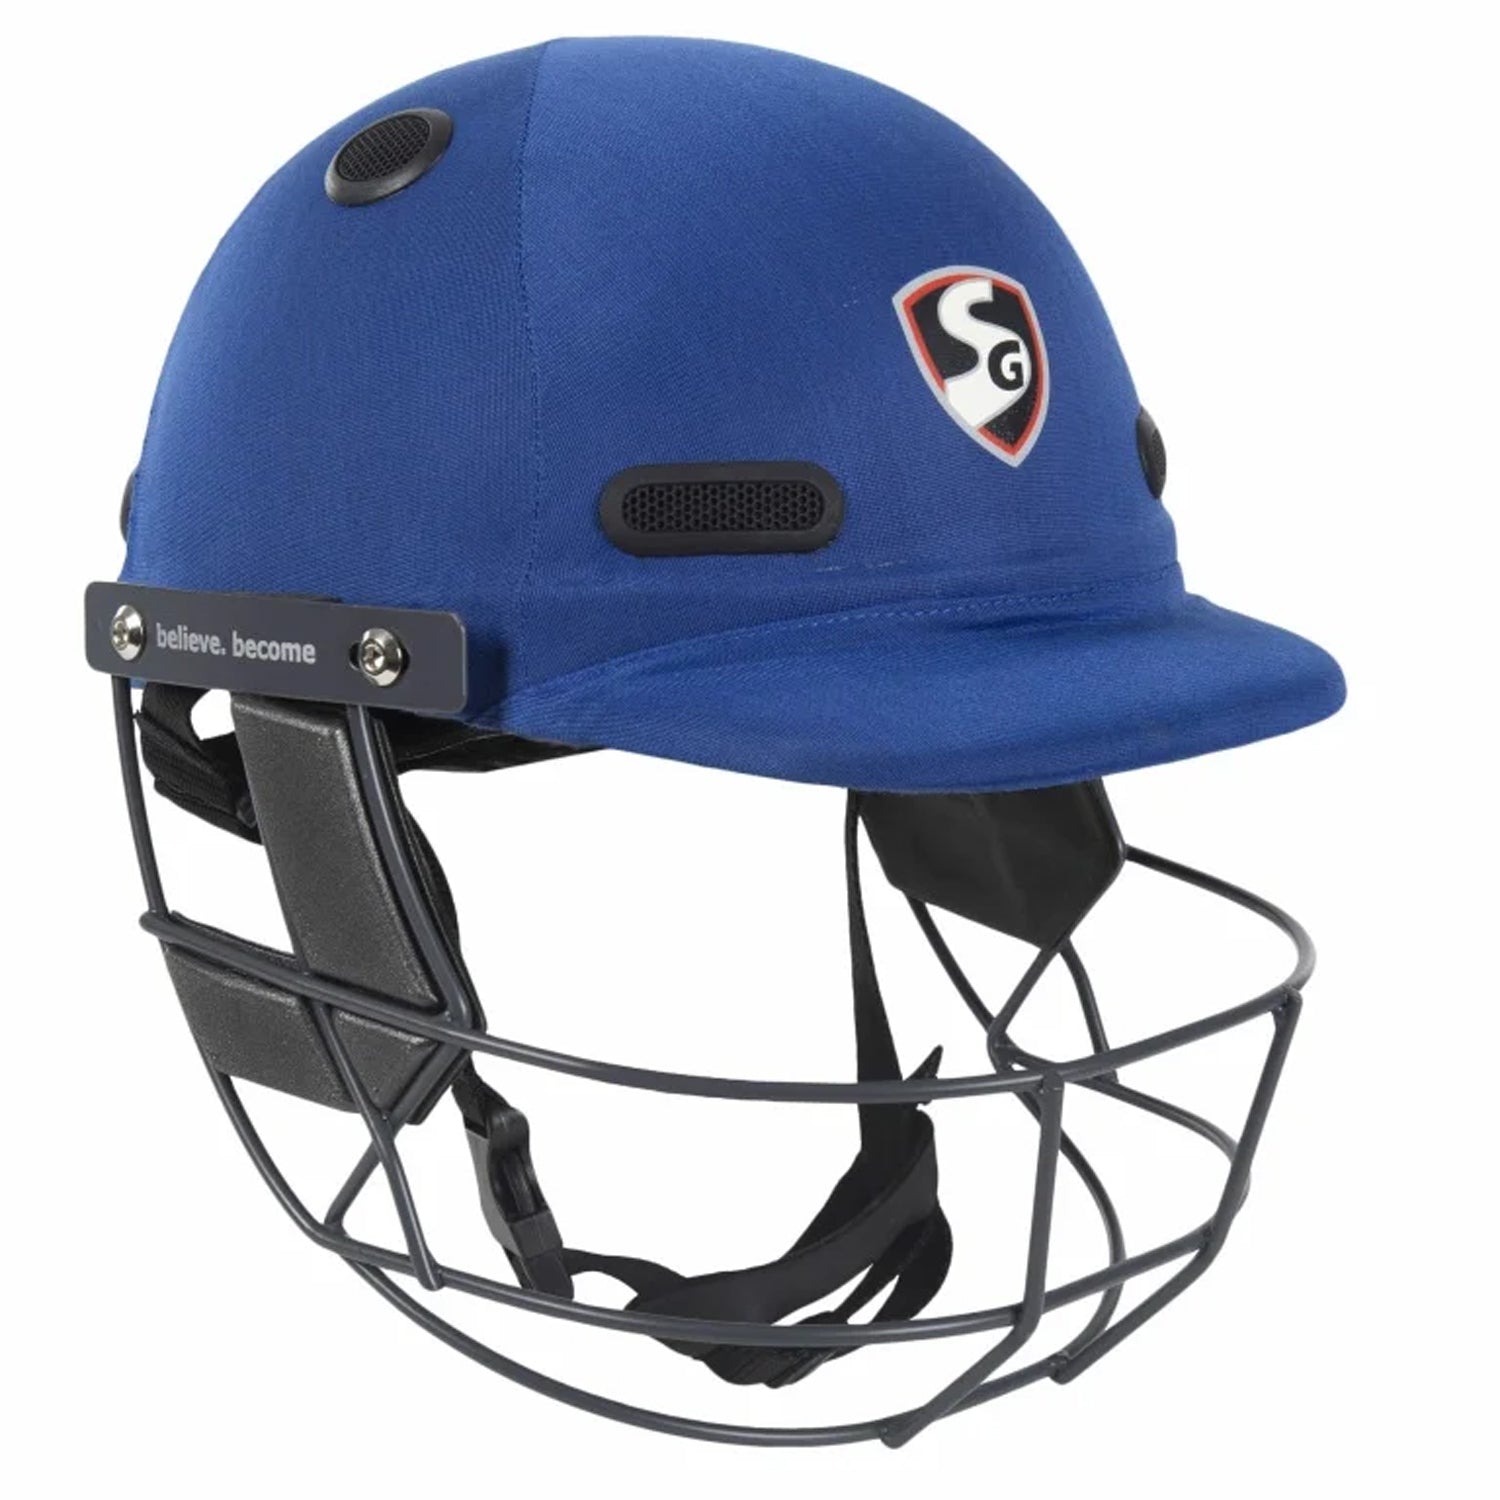 SG Ace Tech Cricket Helmet - Best Price online Prokicksports.com